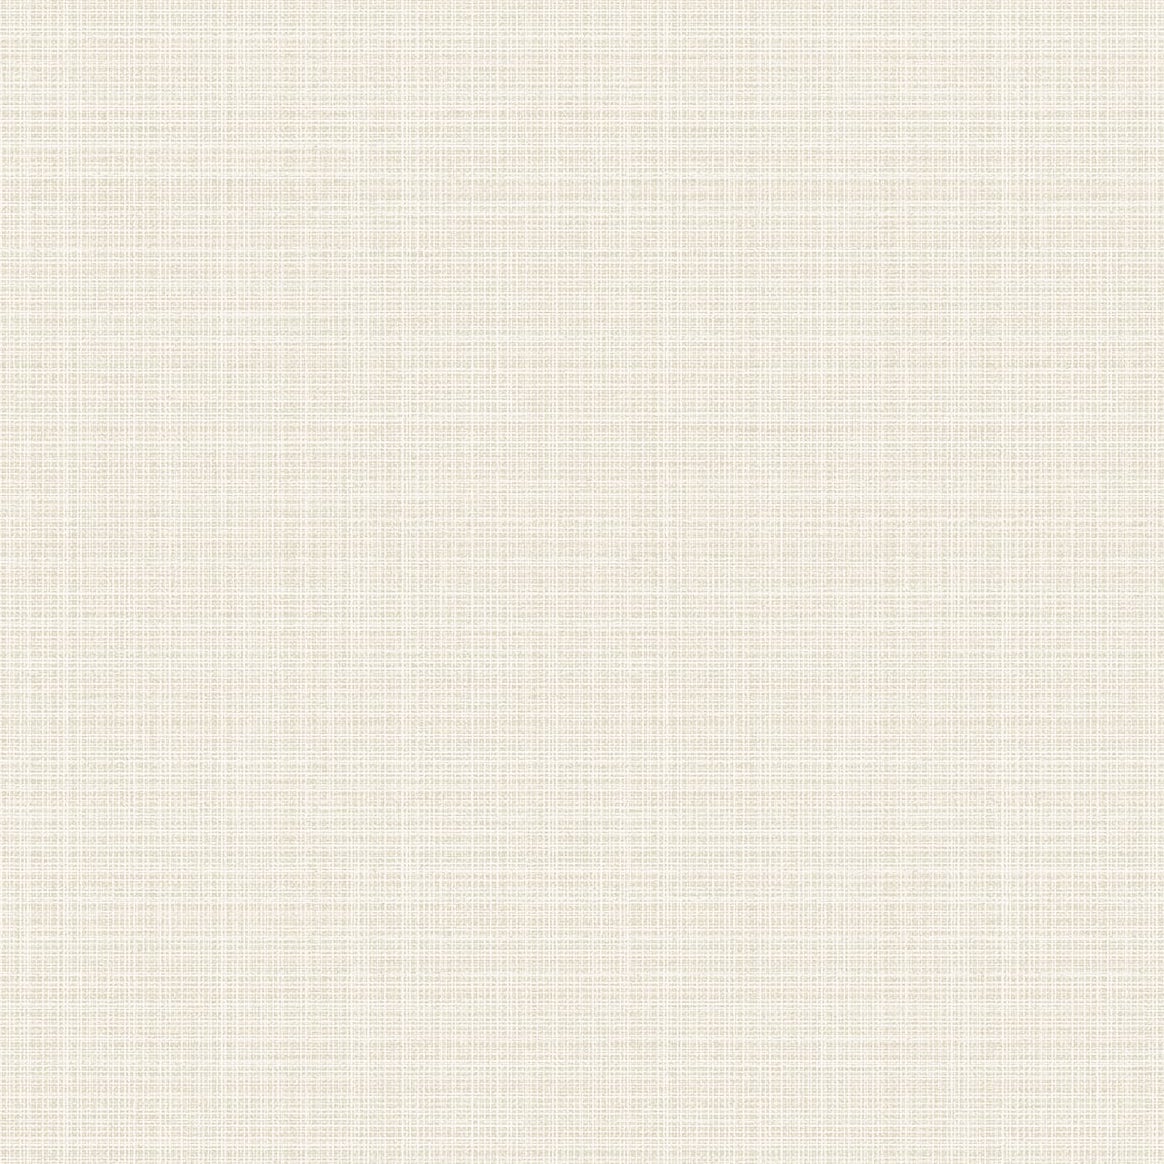 2231903 | Crosshatch Linen, Off-White - Etten Gallerie Wallpaper